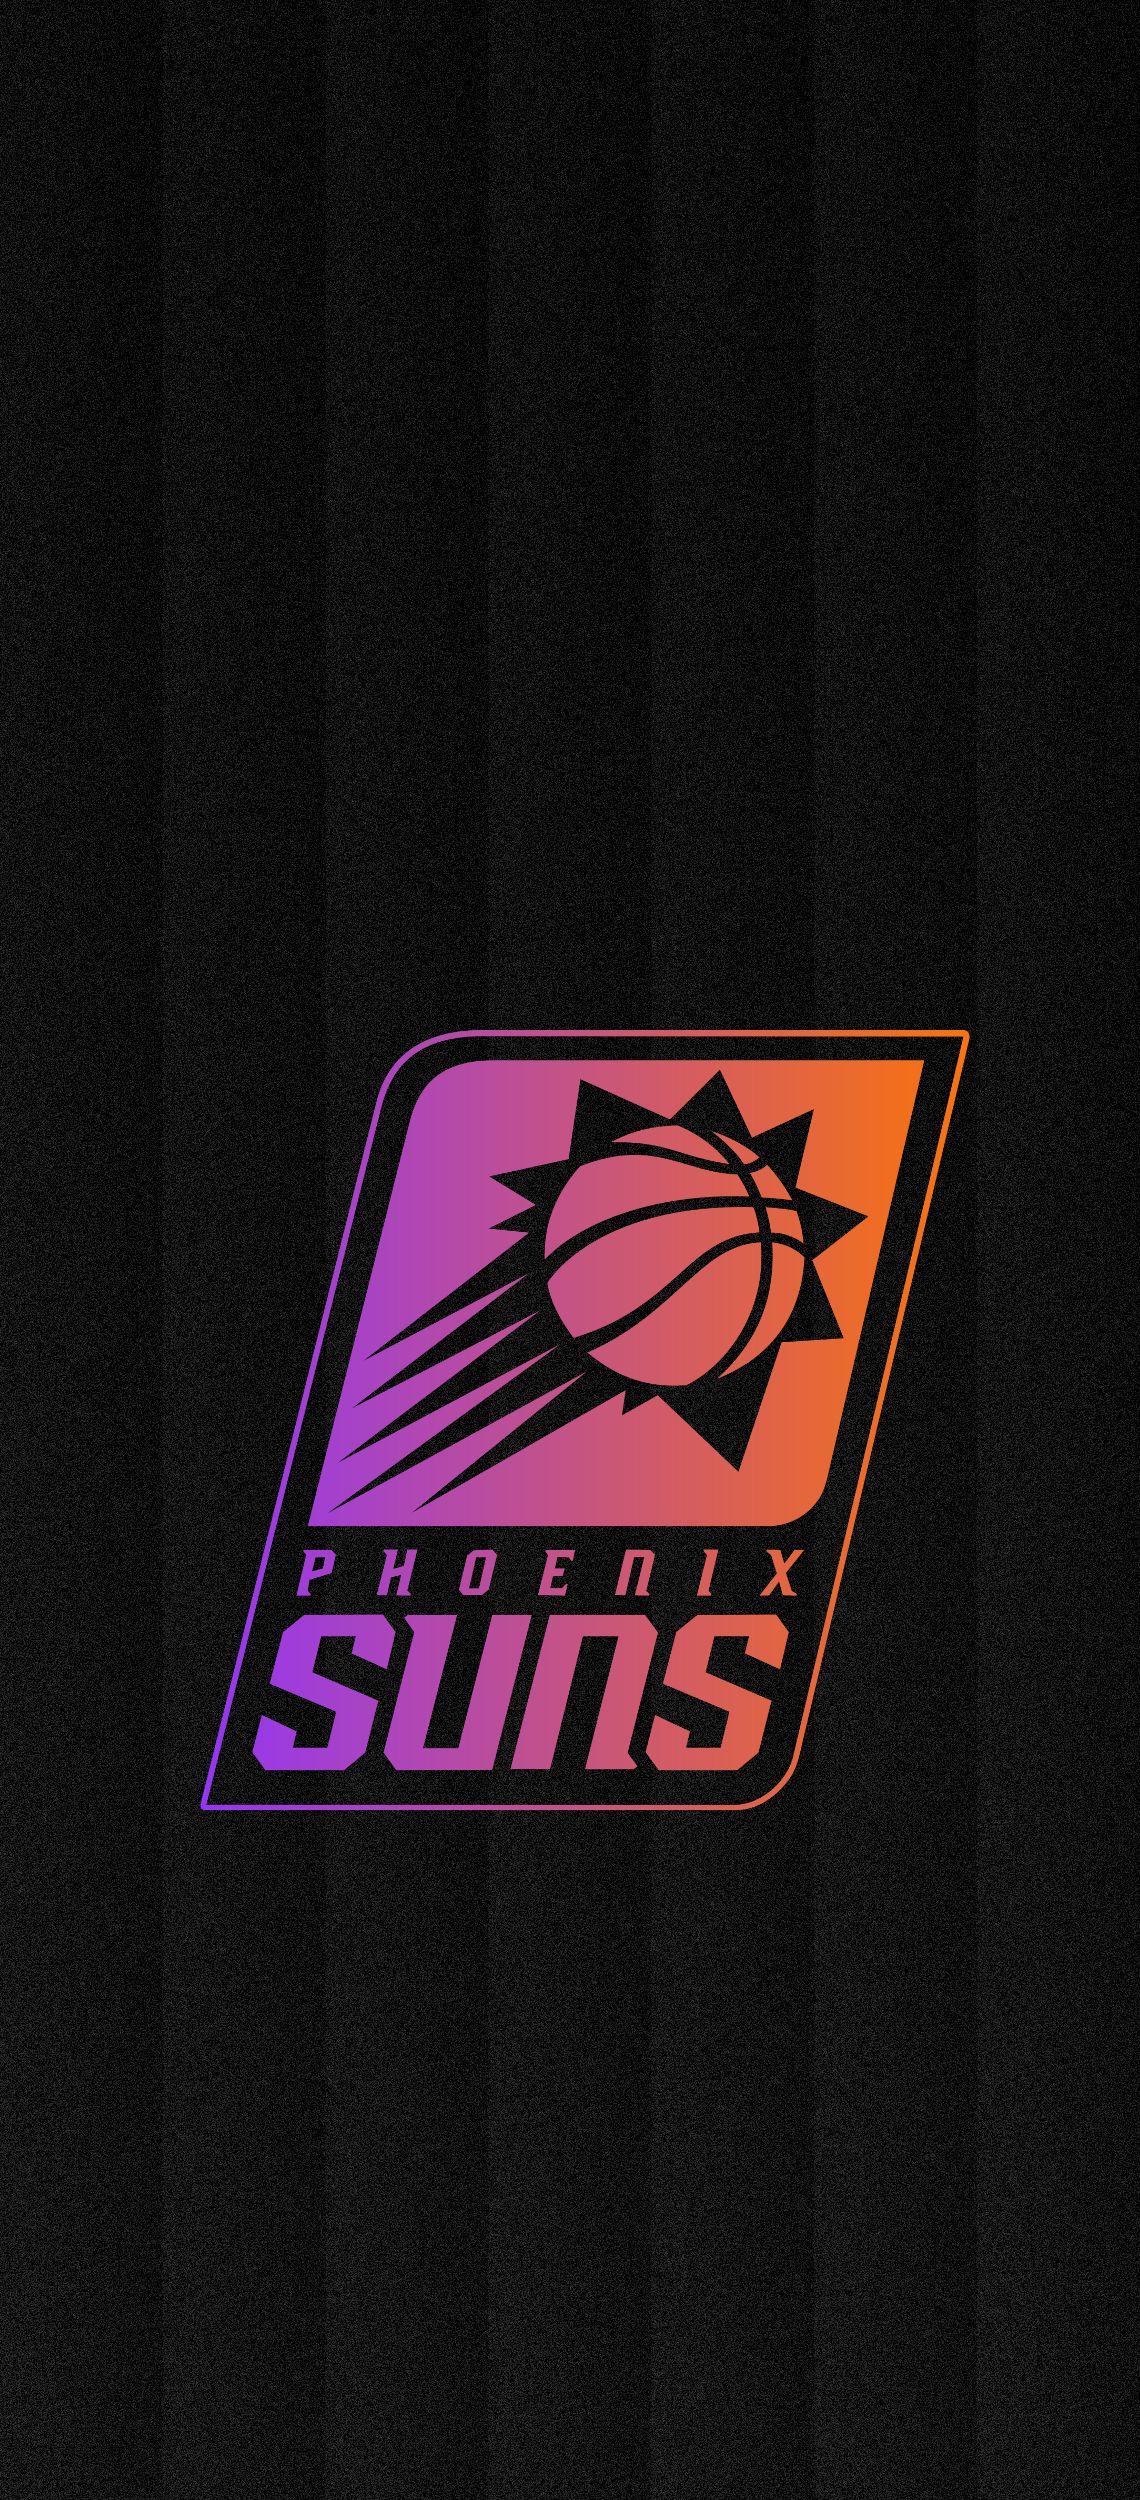 NBA Basketball Team Phoenix Suns phone background. Phoenix